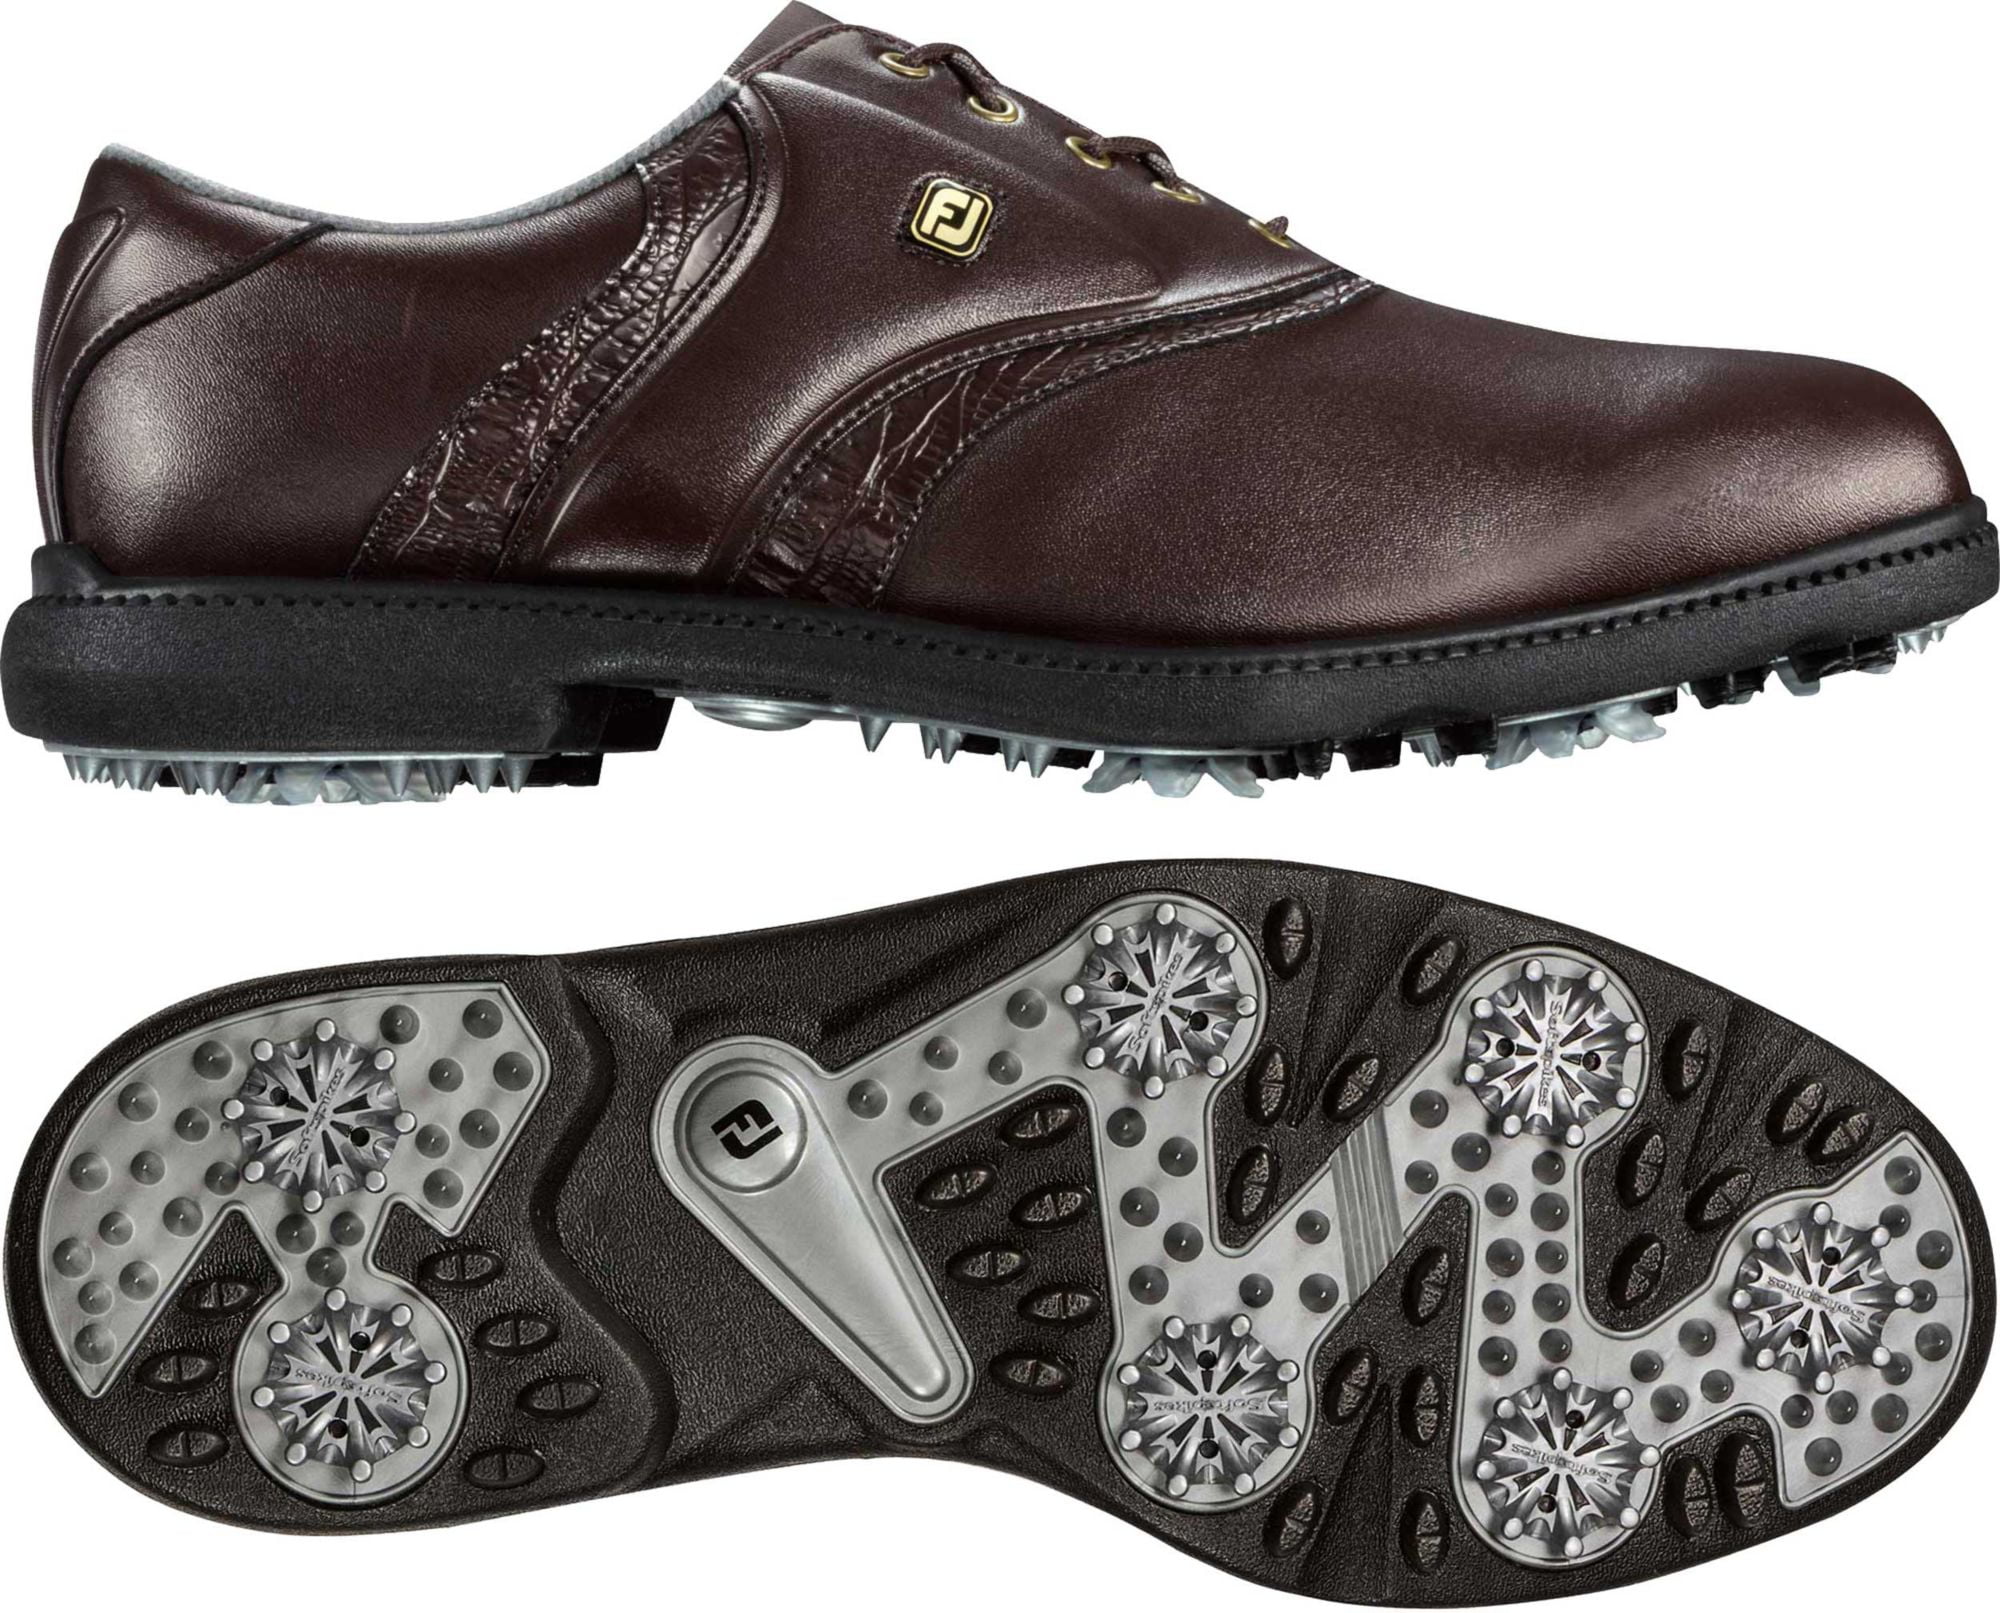 fj originals spikeless golf shoes